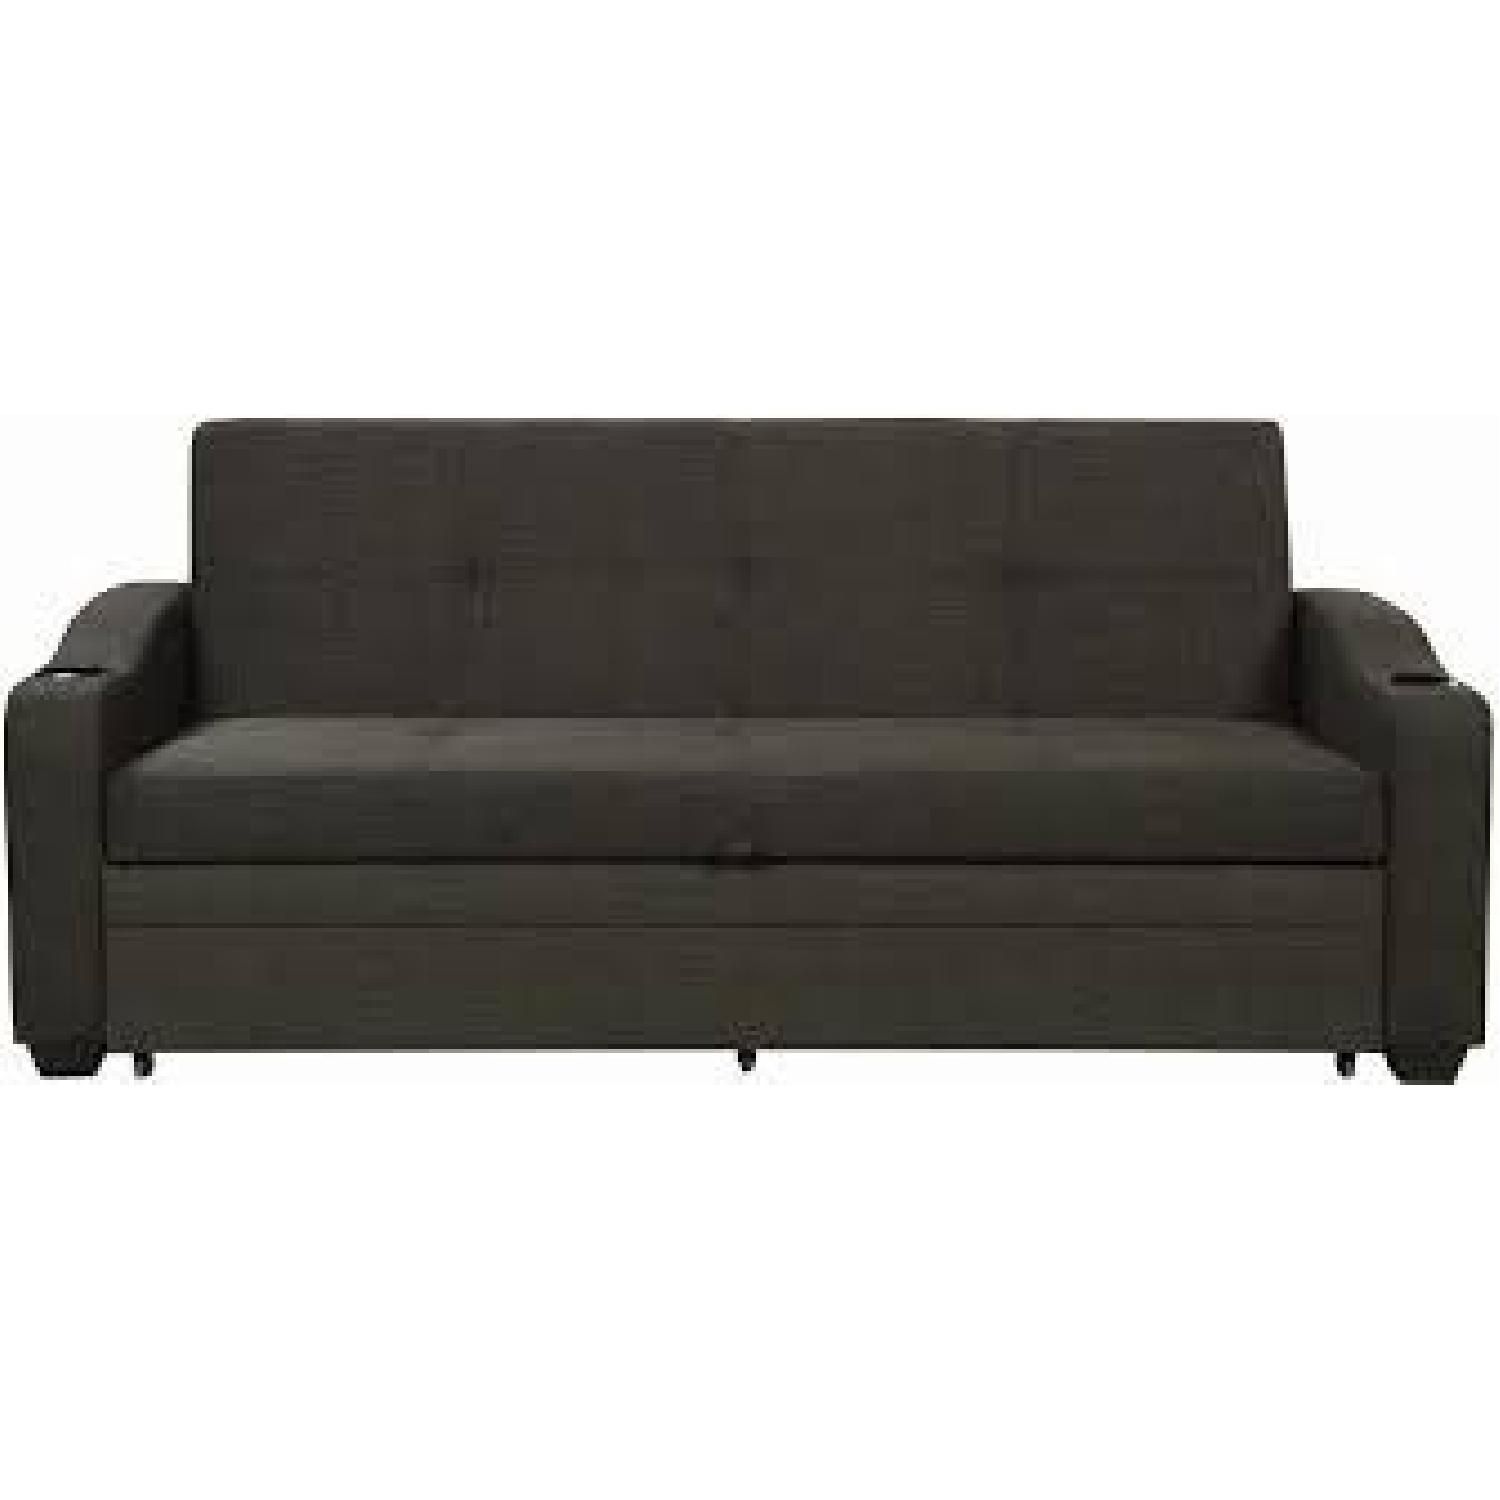 Charcoal Grey Pull Out Sleeper Sofa – Aptdeco Within 3 In 1 Gray Pull Out Sleeper Sofas (View 18 of 20)